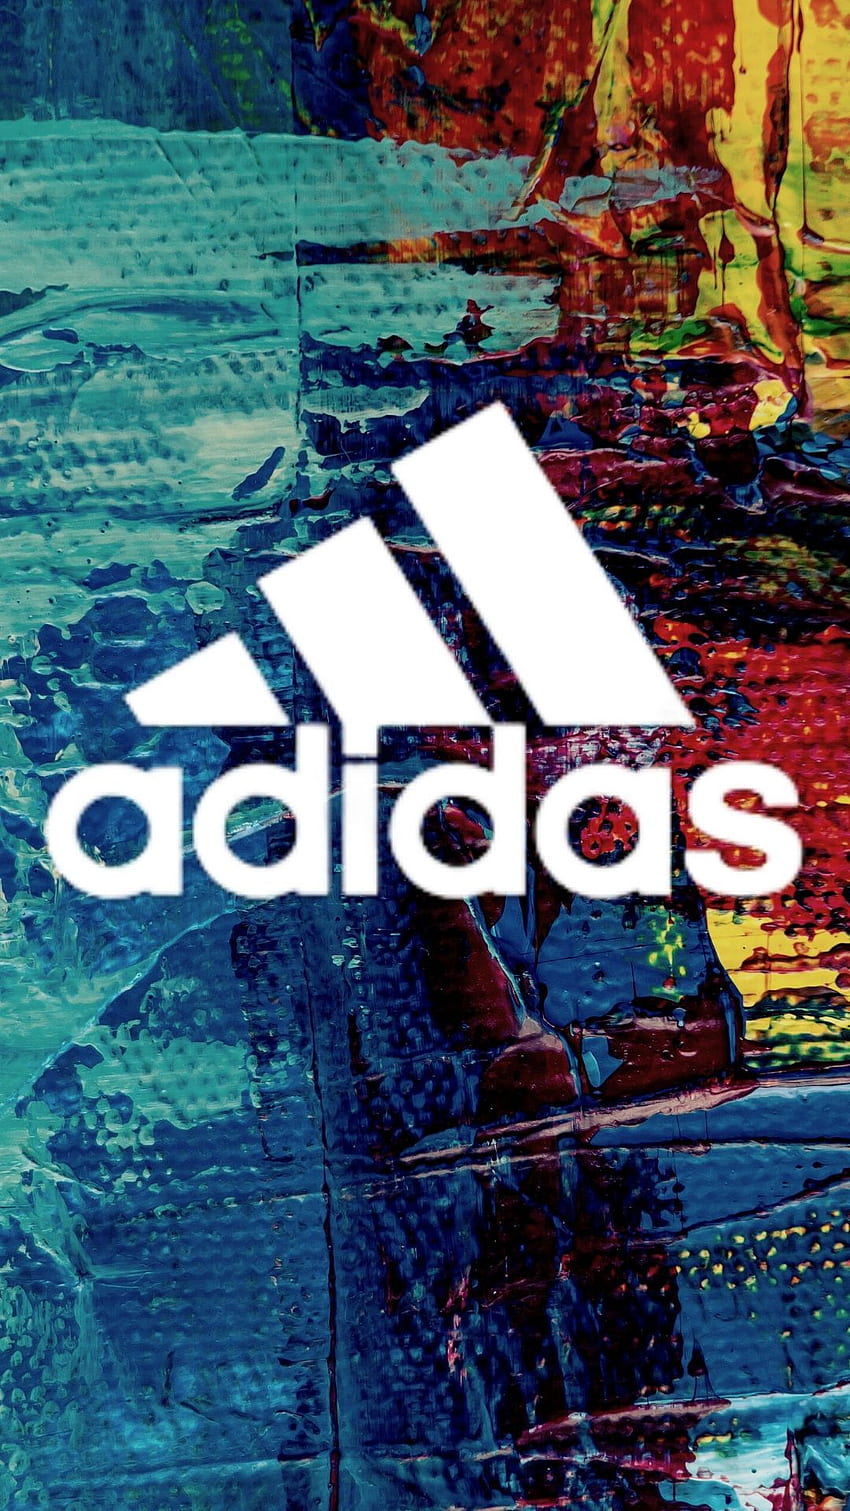 Adidas Wallpapers Free HD Download 500 HQ  Unsplash